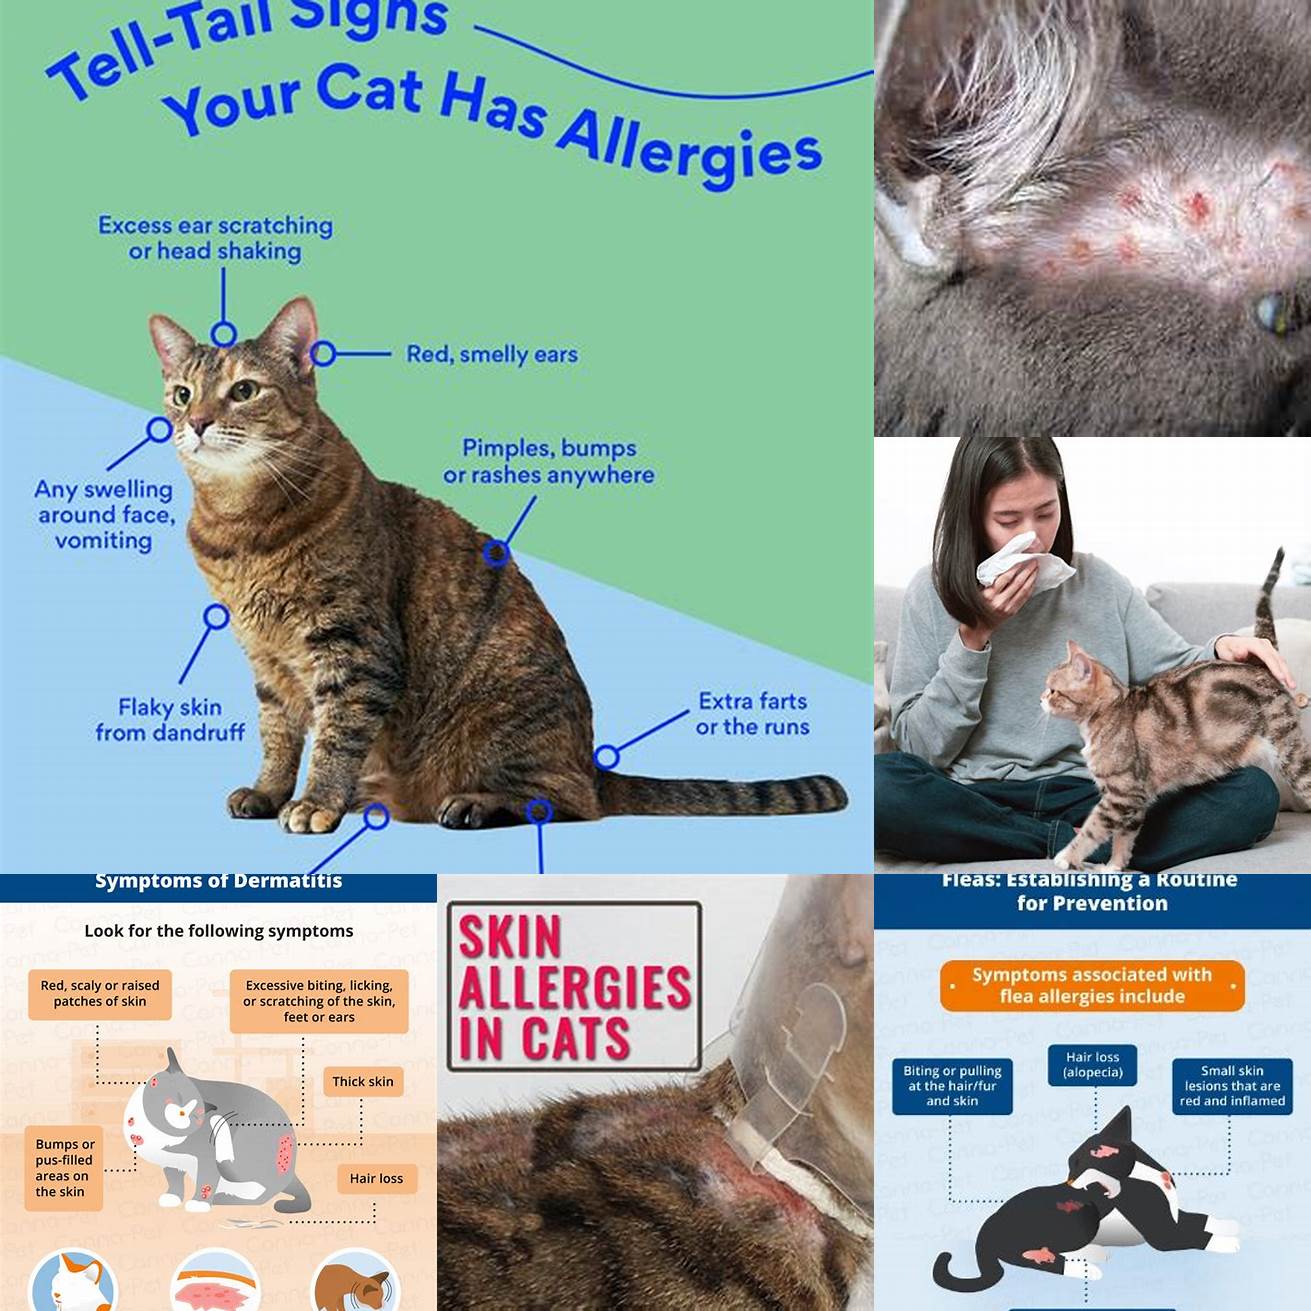 4 Allergic reactions